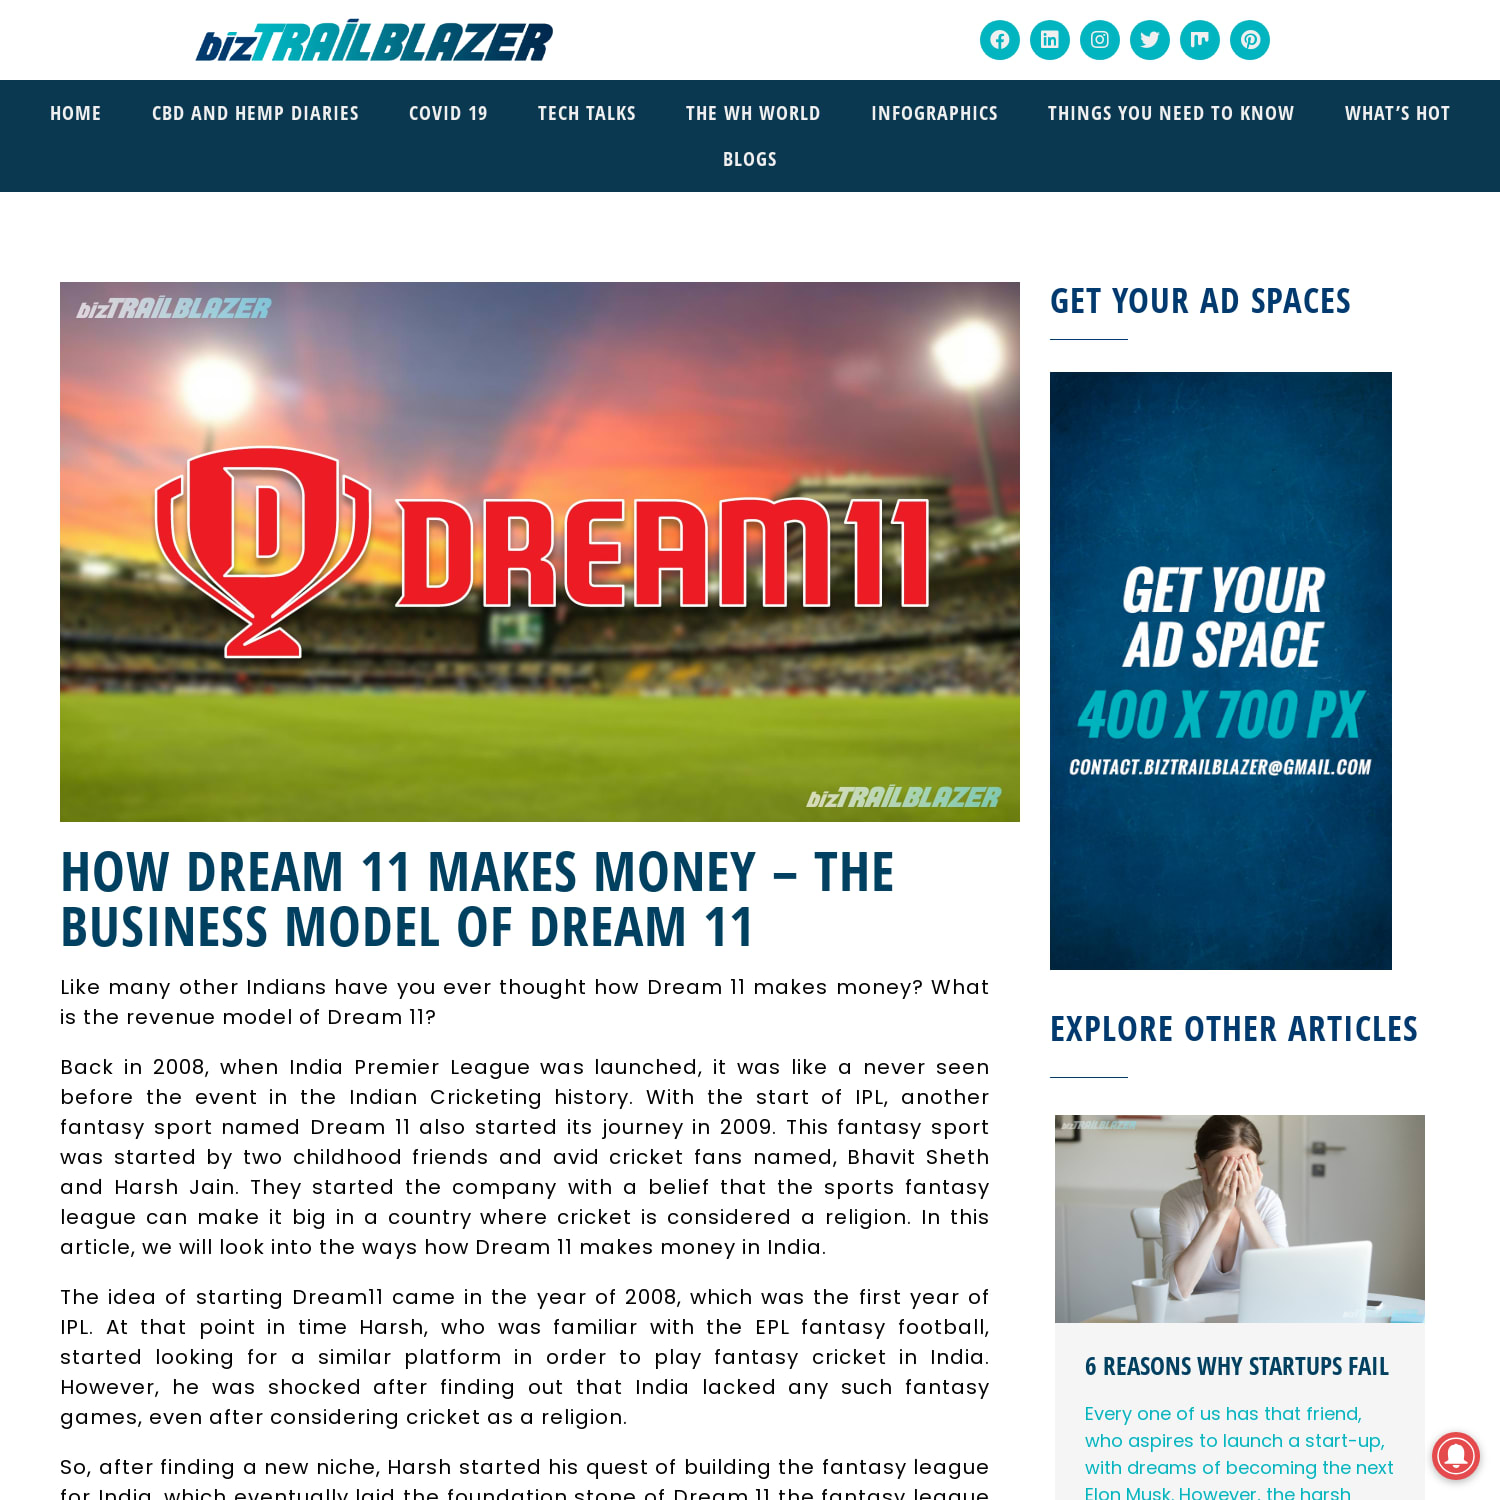 How Dream 11 Makes Money - The Business Model of Dream 11